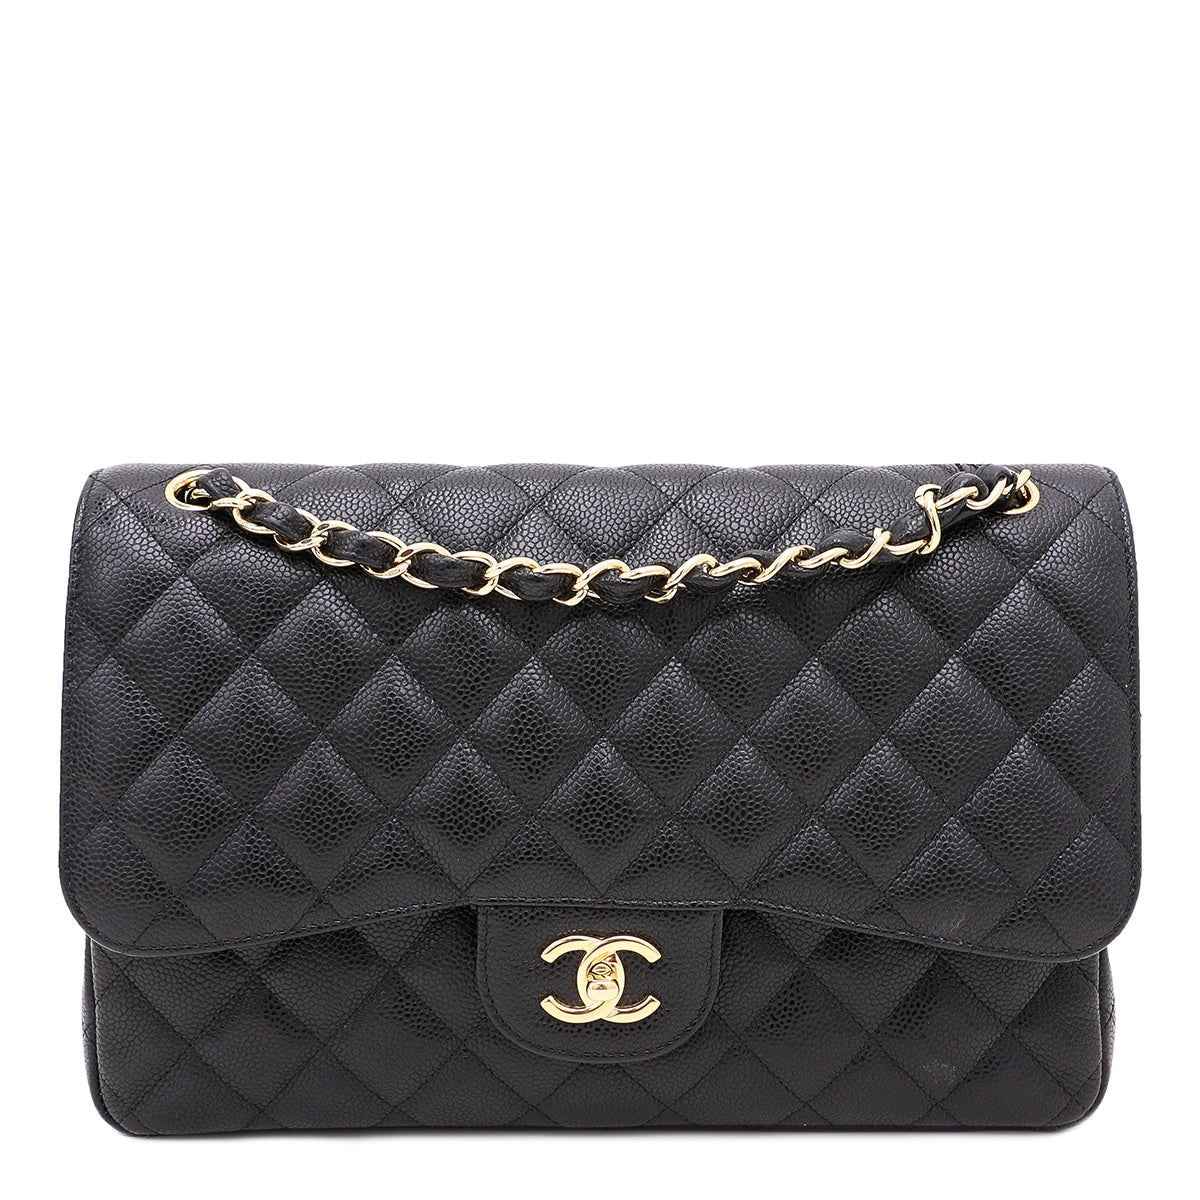 The Closet - Chanel Black CC Classic Double Flap Jumbo Bag | The Closet